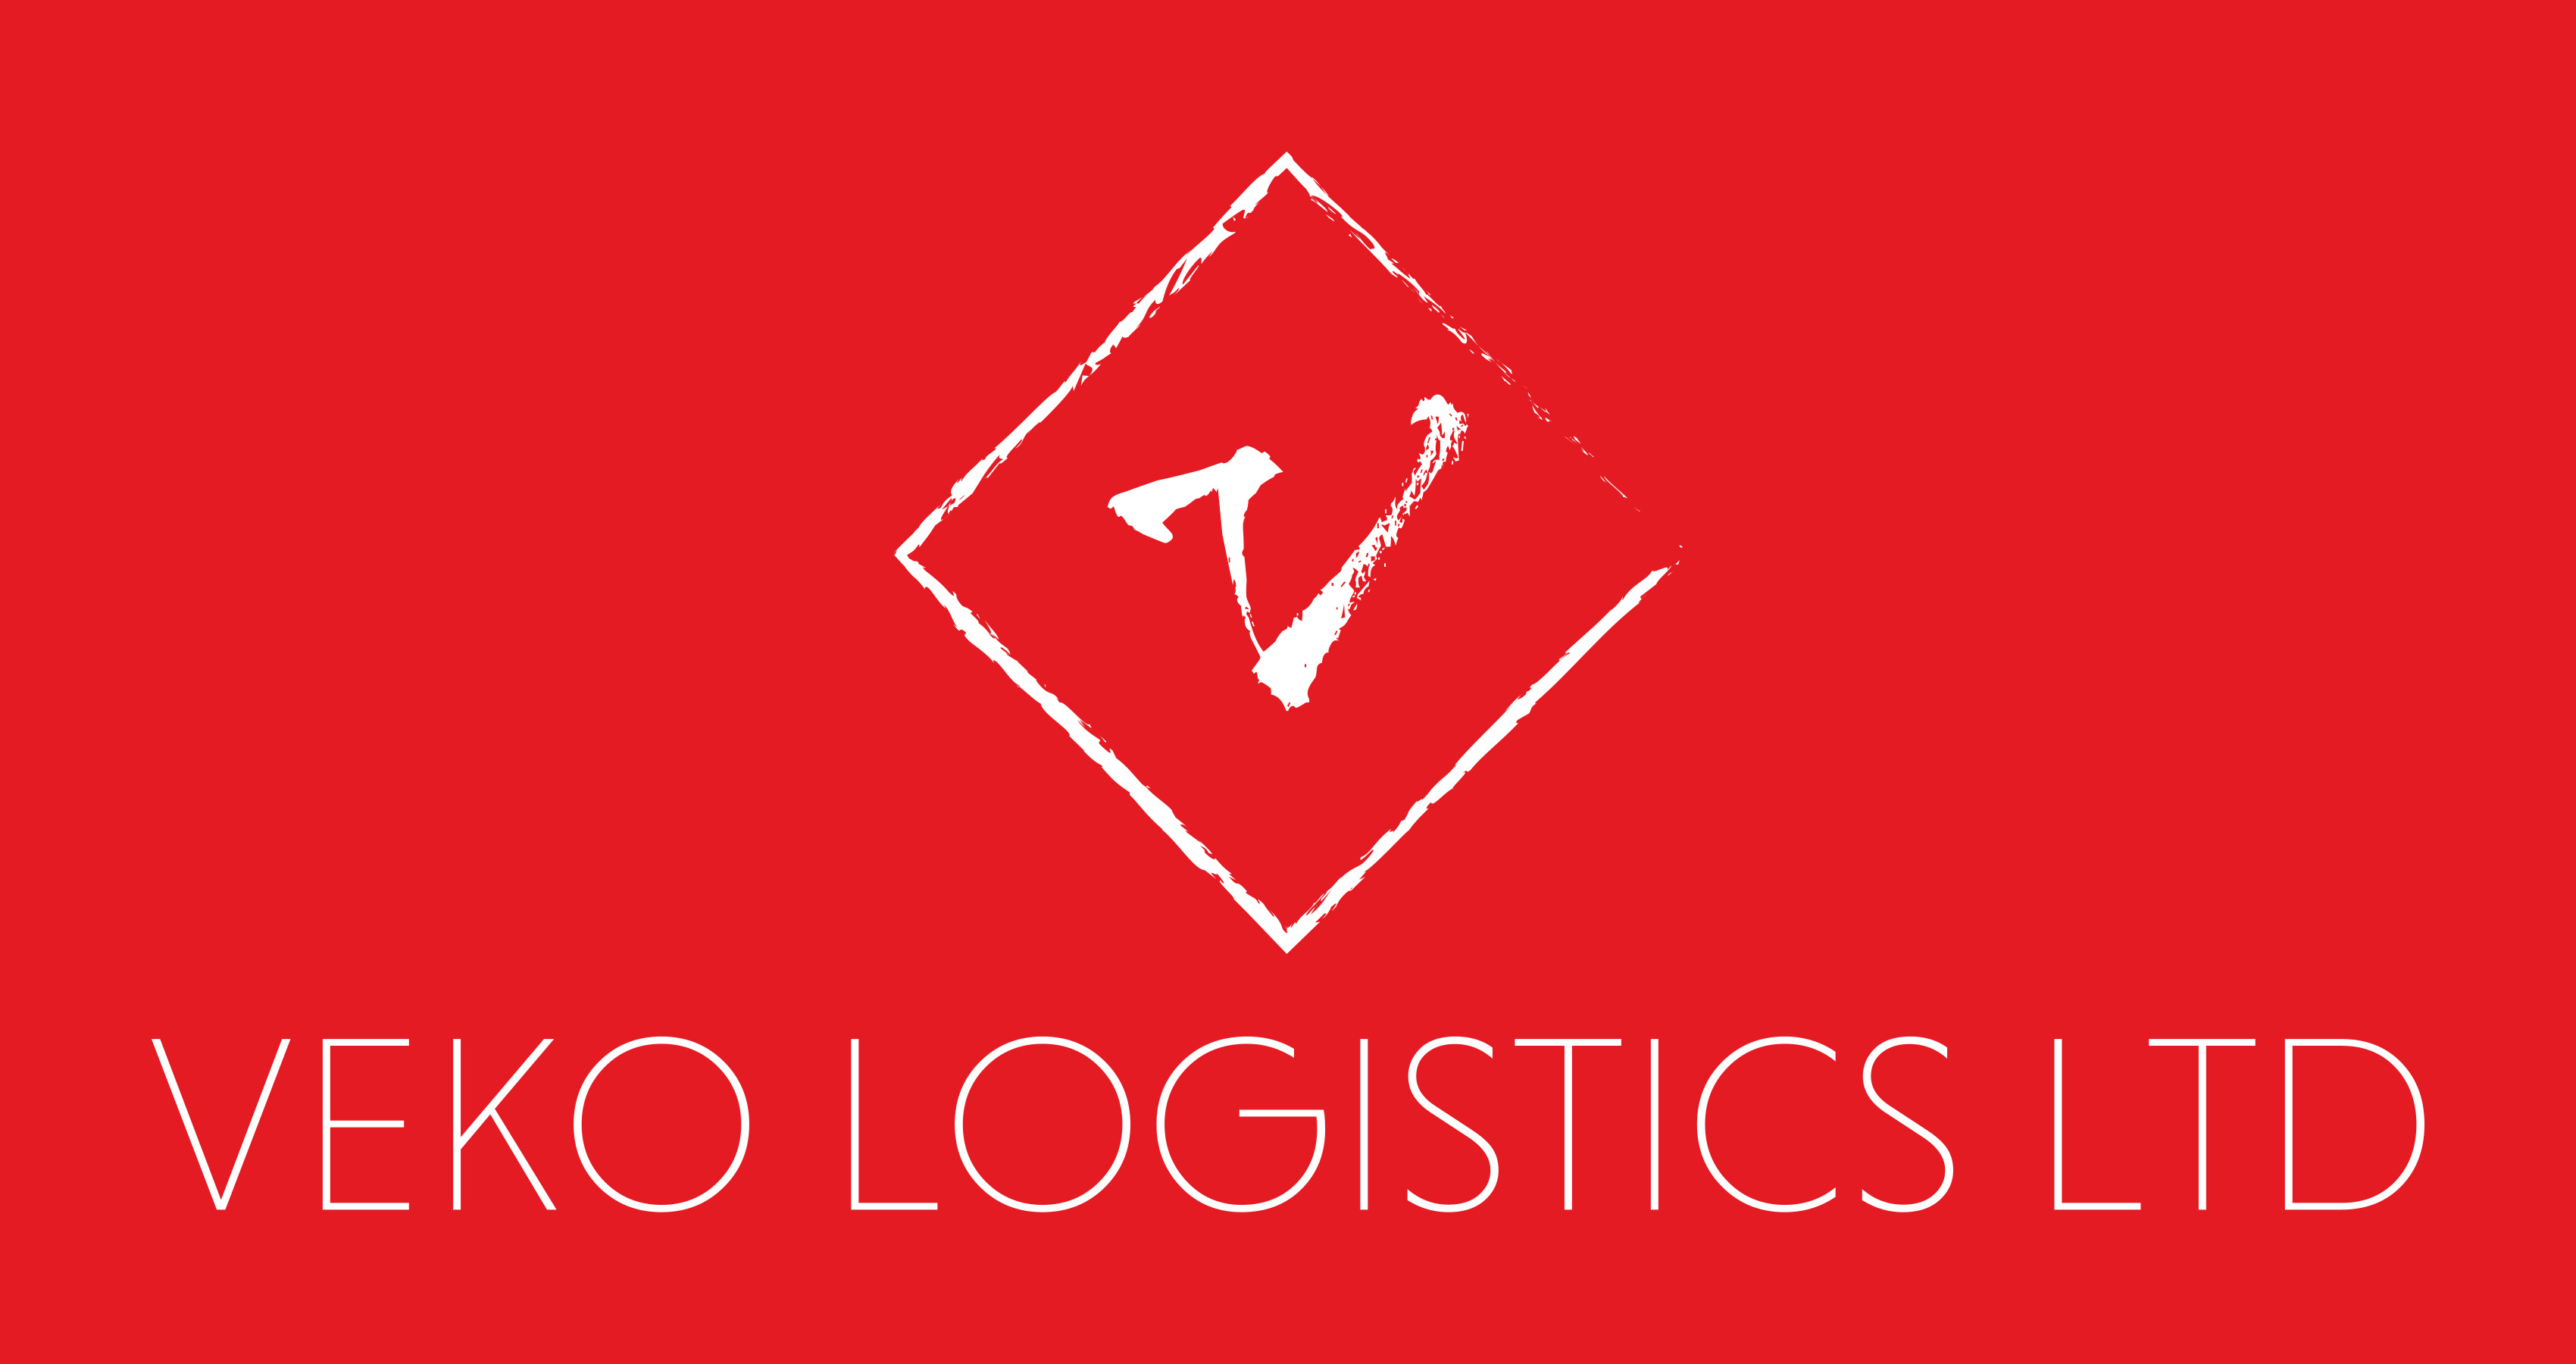 Veko Logistics ltd